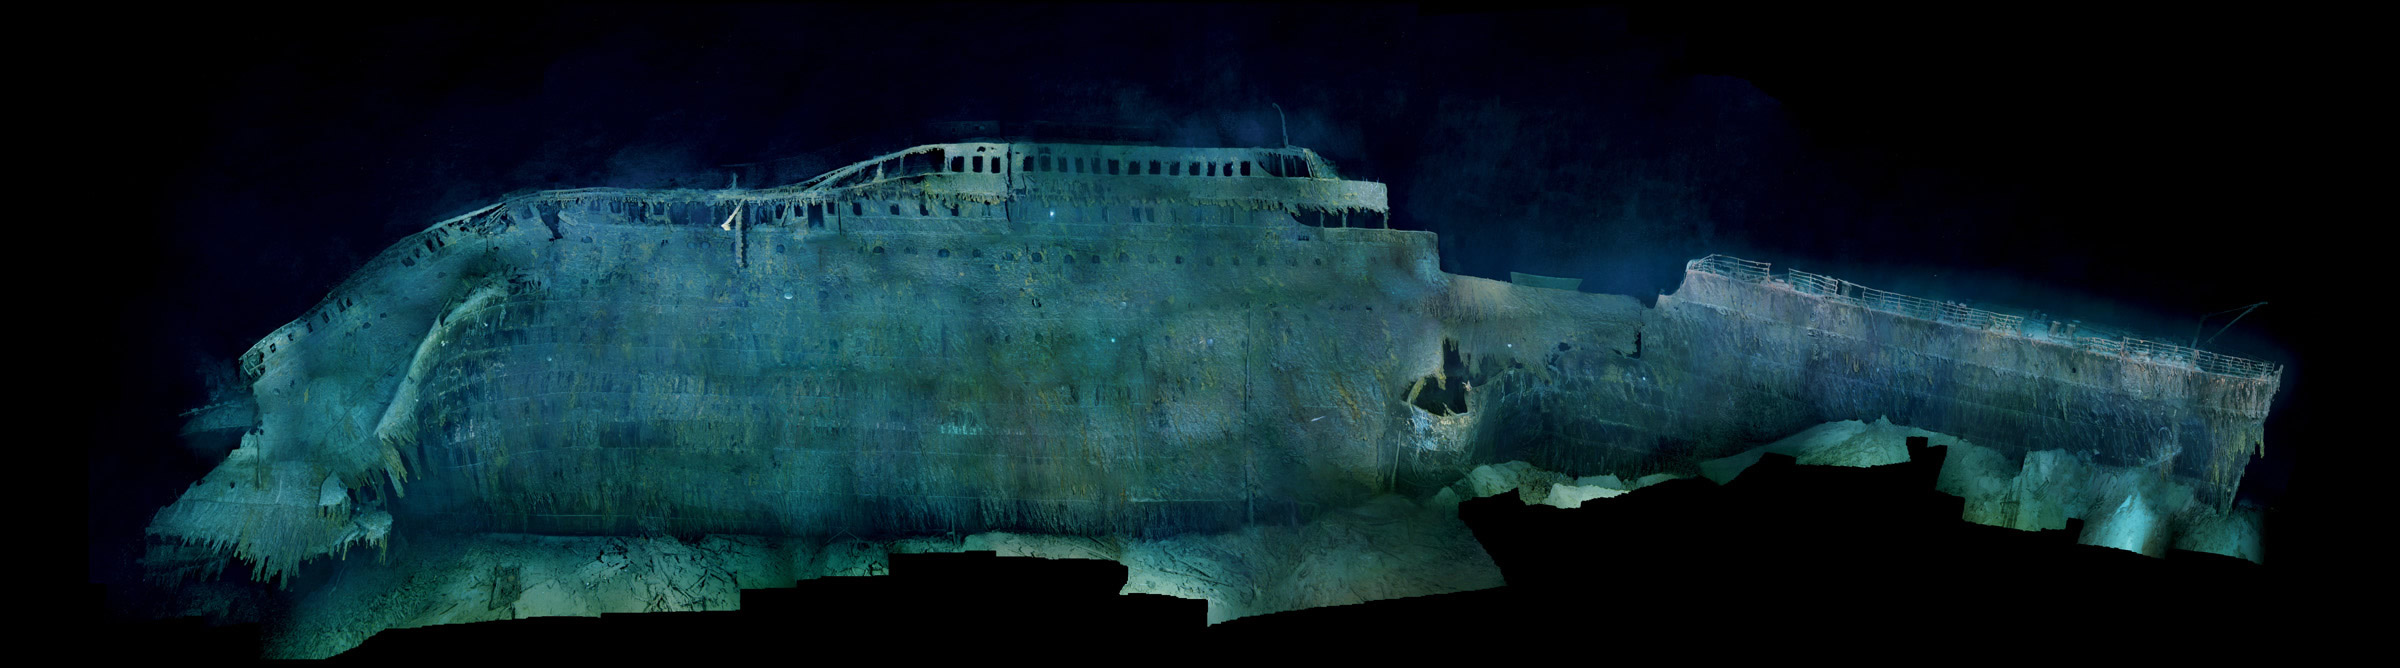 The History Blog Blog Archive Amazing New Titanic Pics